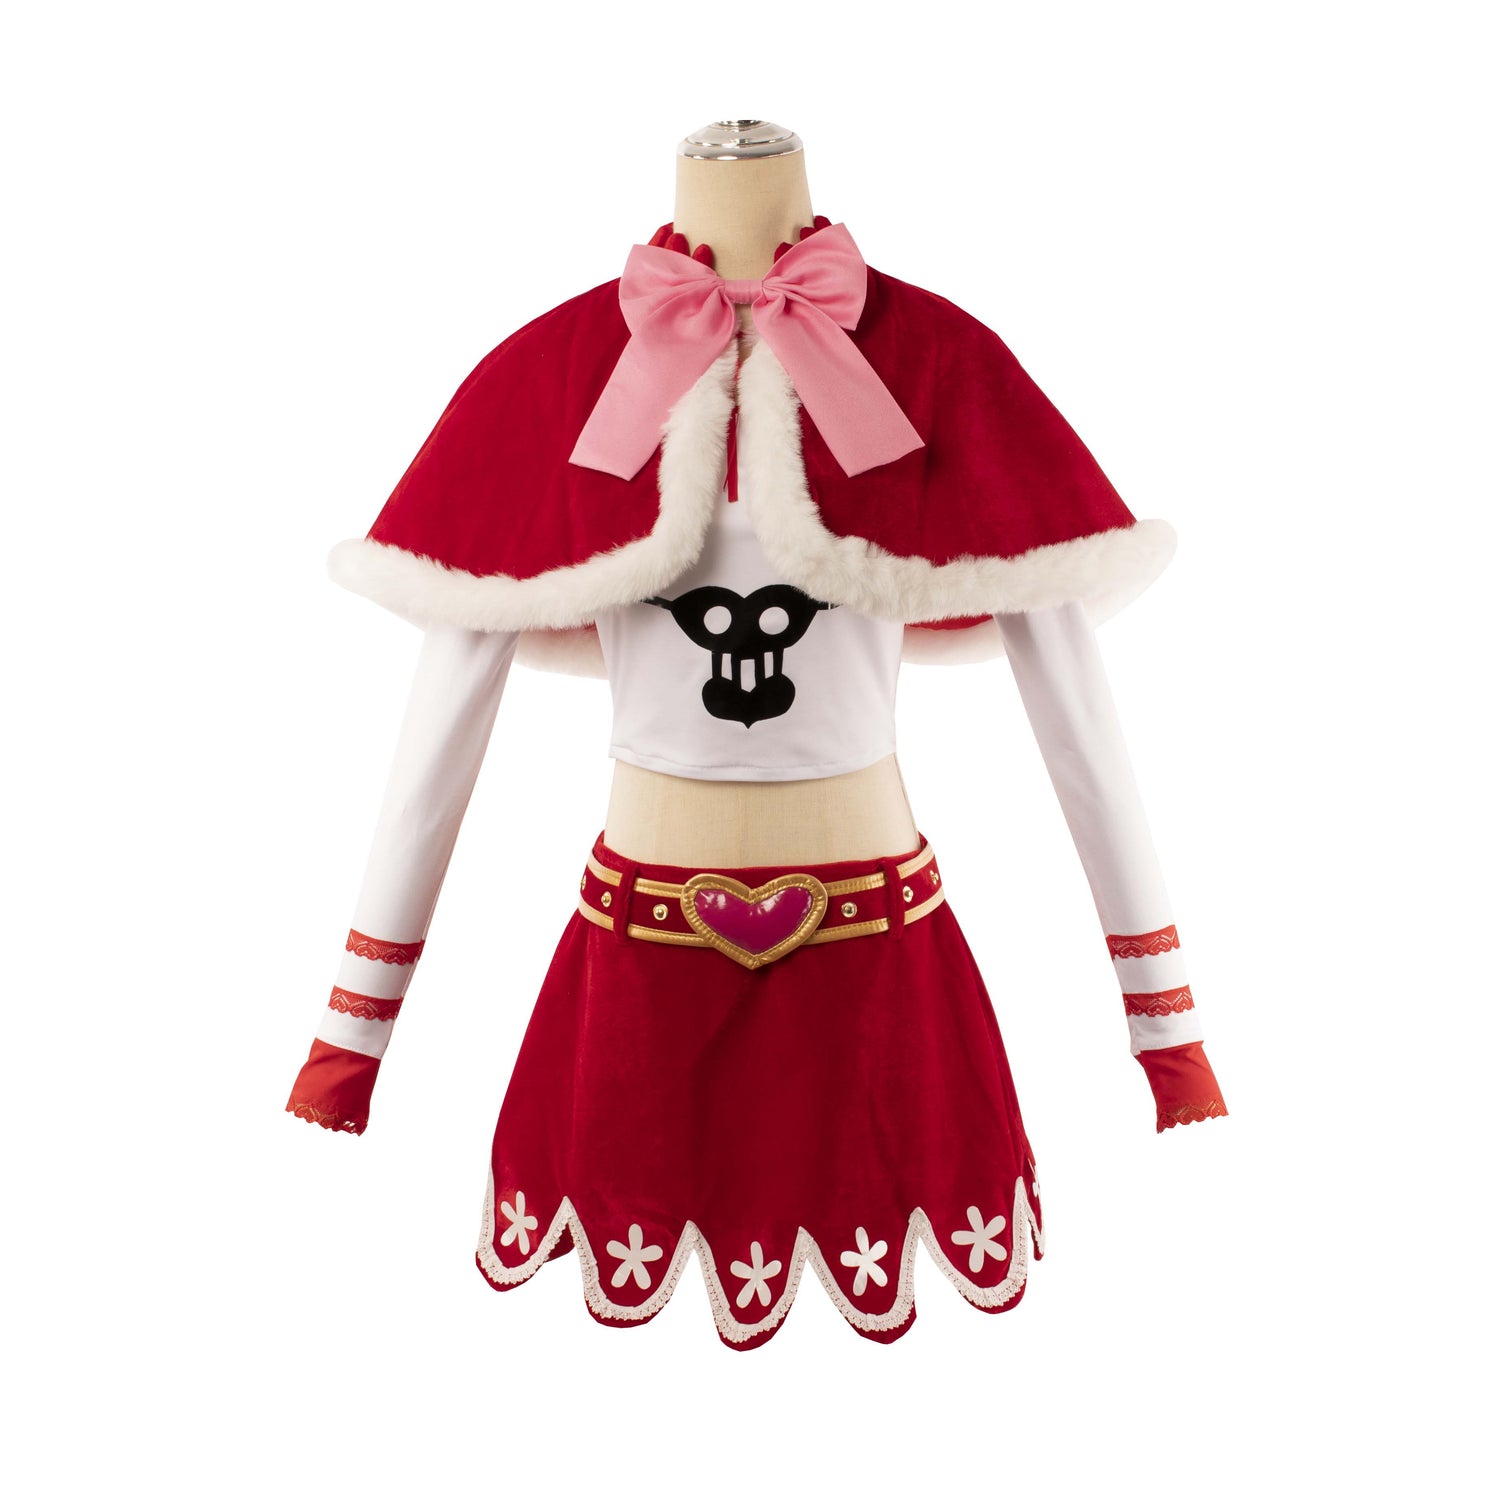 SBluuCosplay One Piece Princess Mononoke Perona Cosplay Costume Outfit